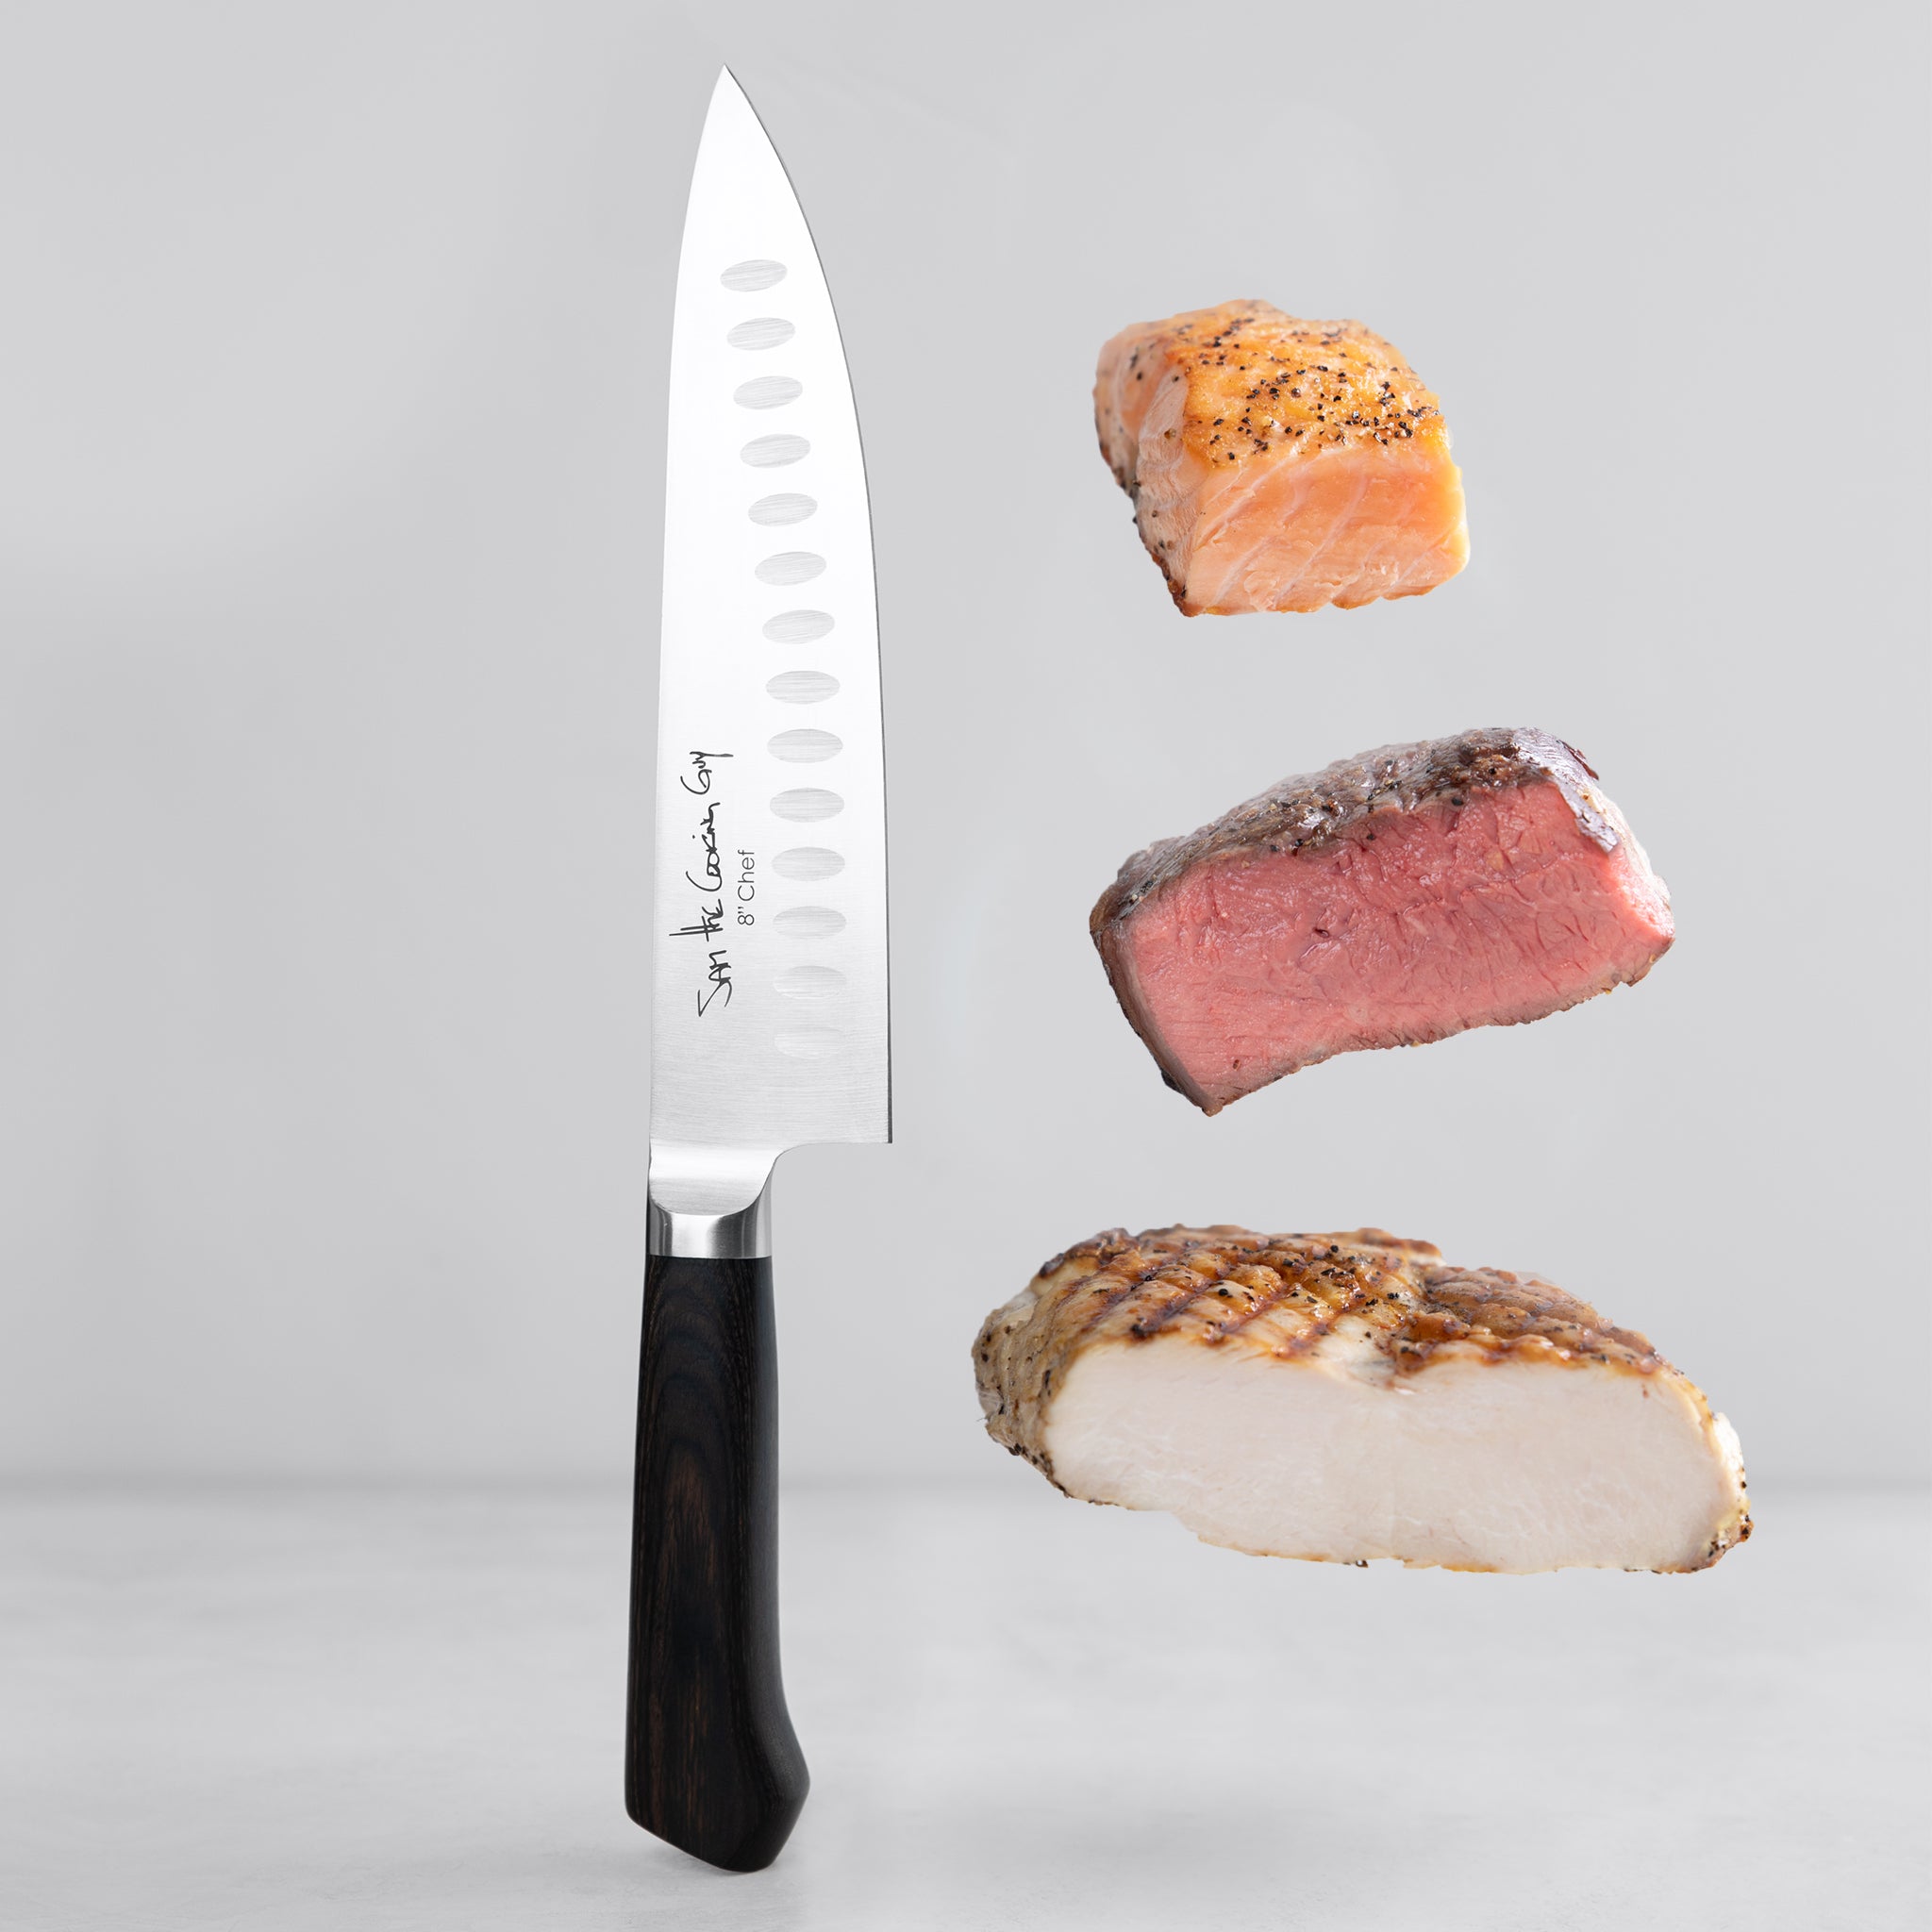 Essentials™ 8 Chef Knife